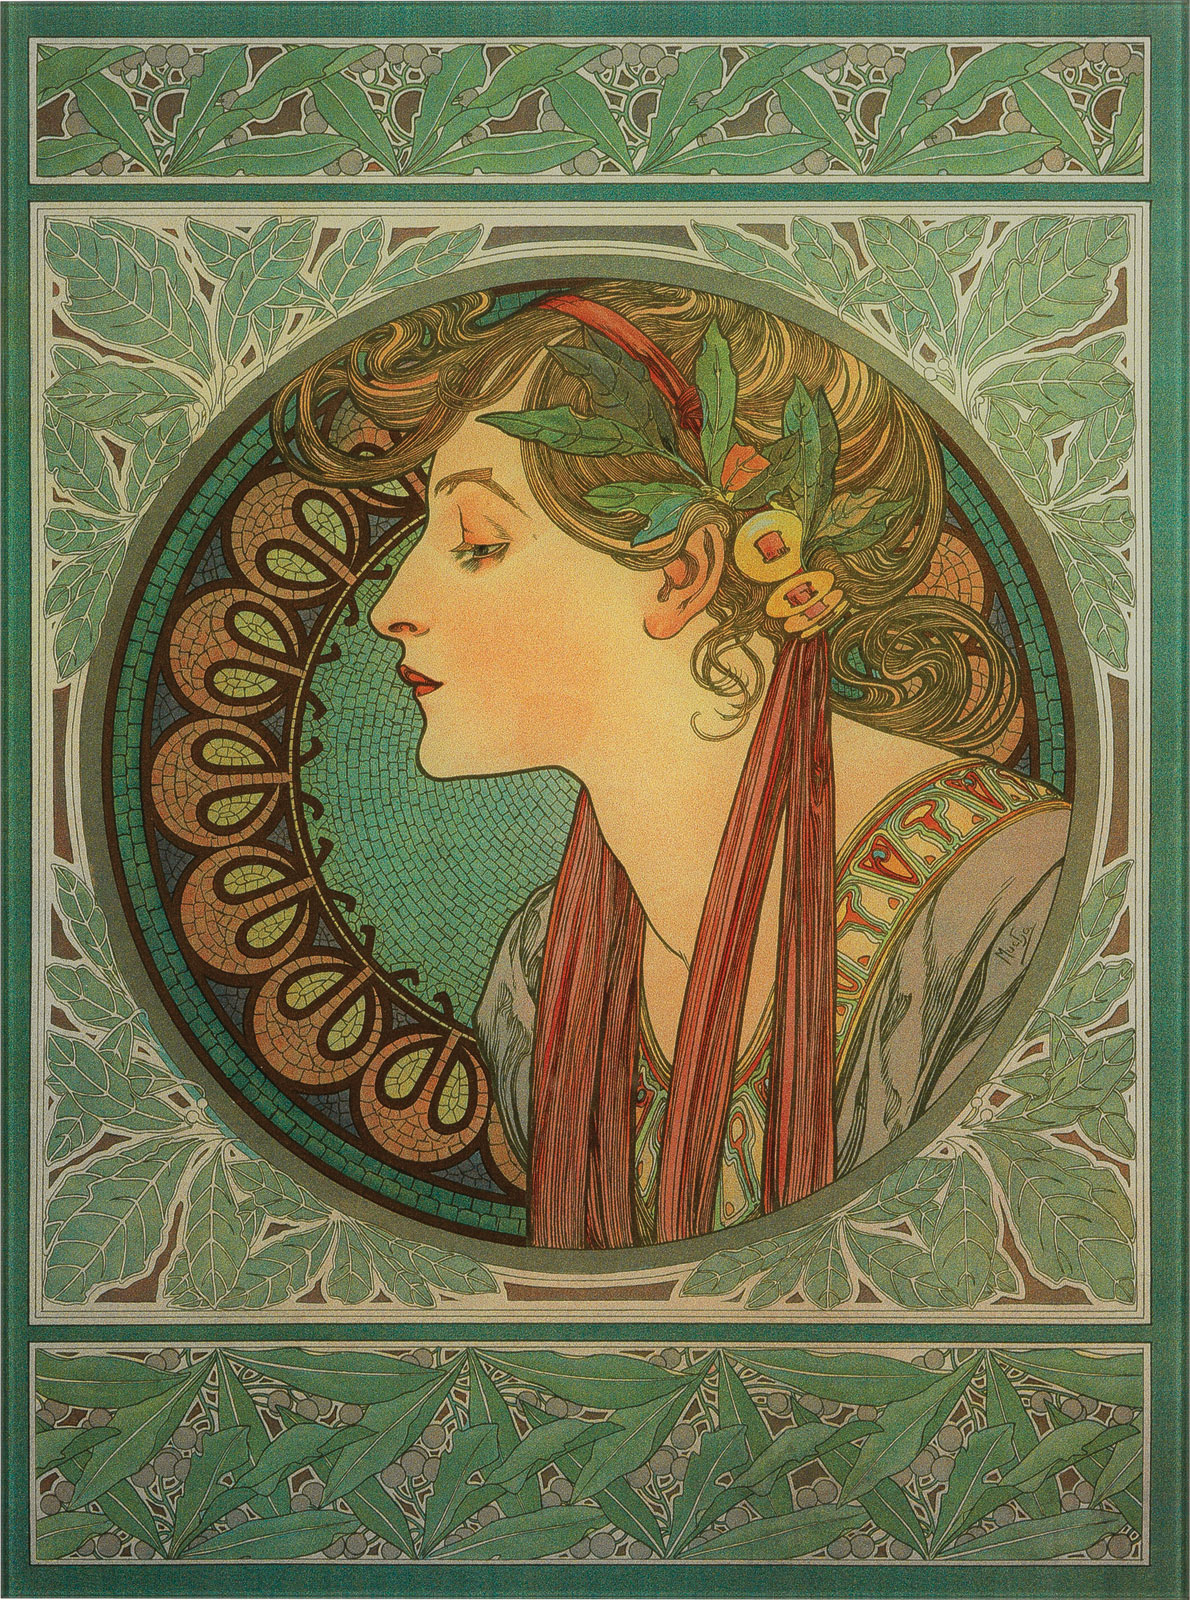 Glasbild "Lorbeer" (1901) by Alphonse Mucha